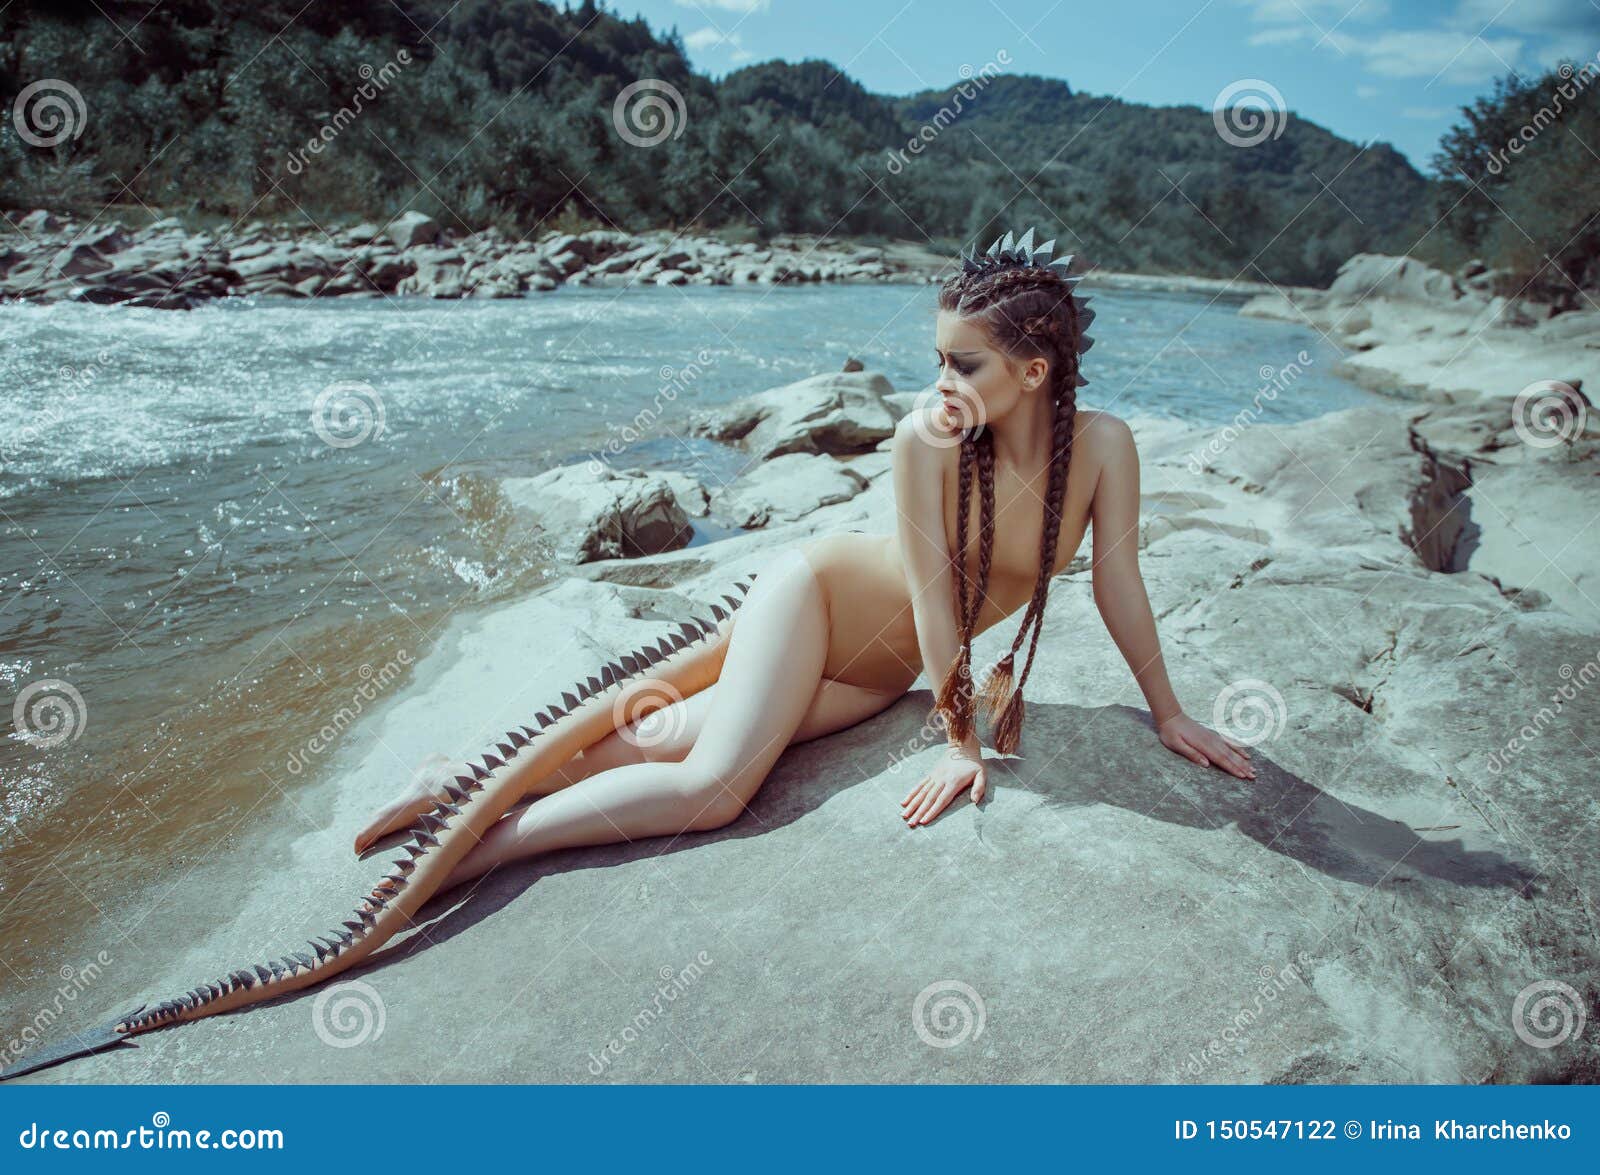 Mermaid Erotic Sexy